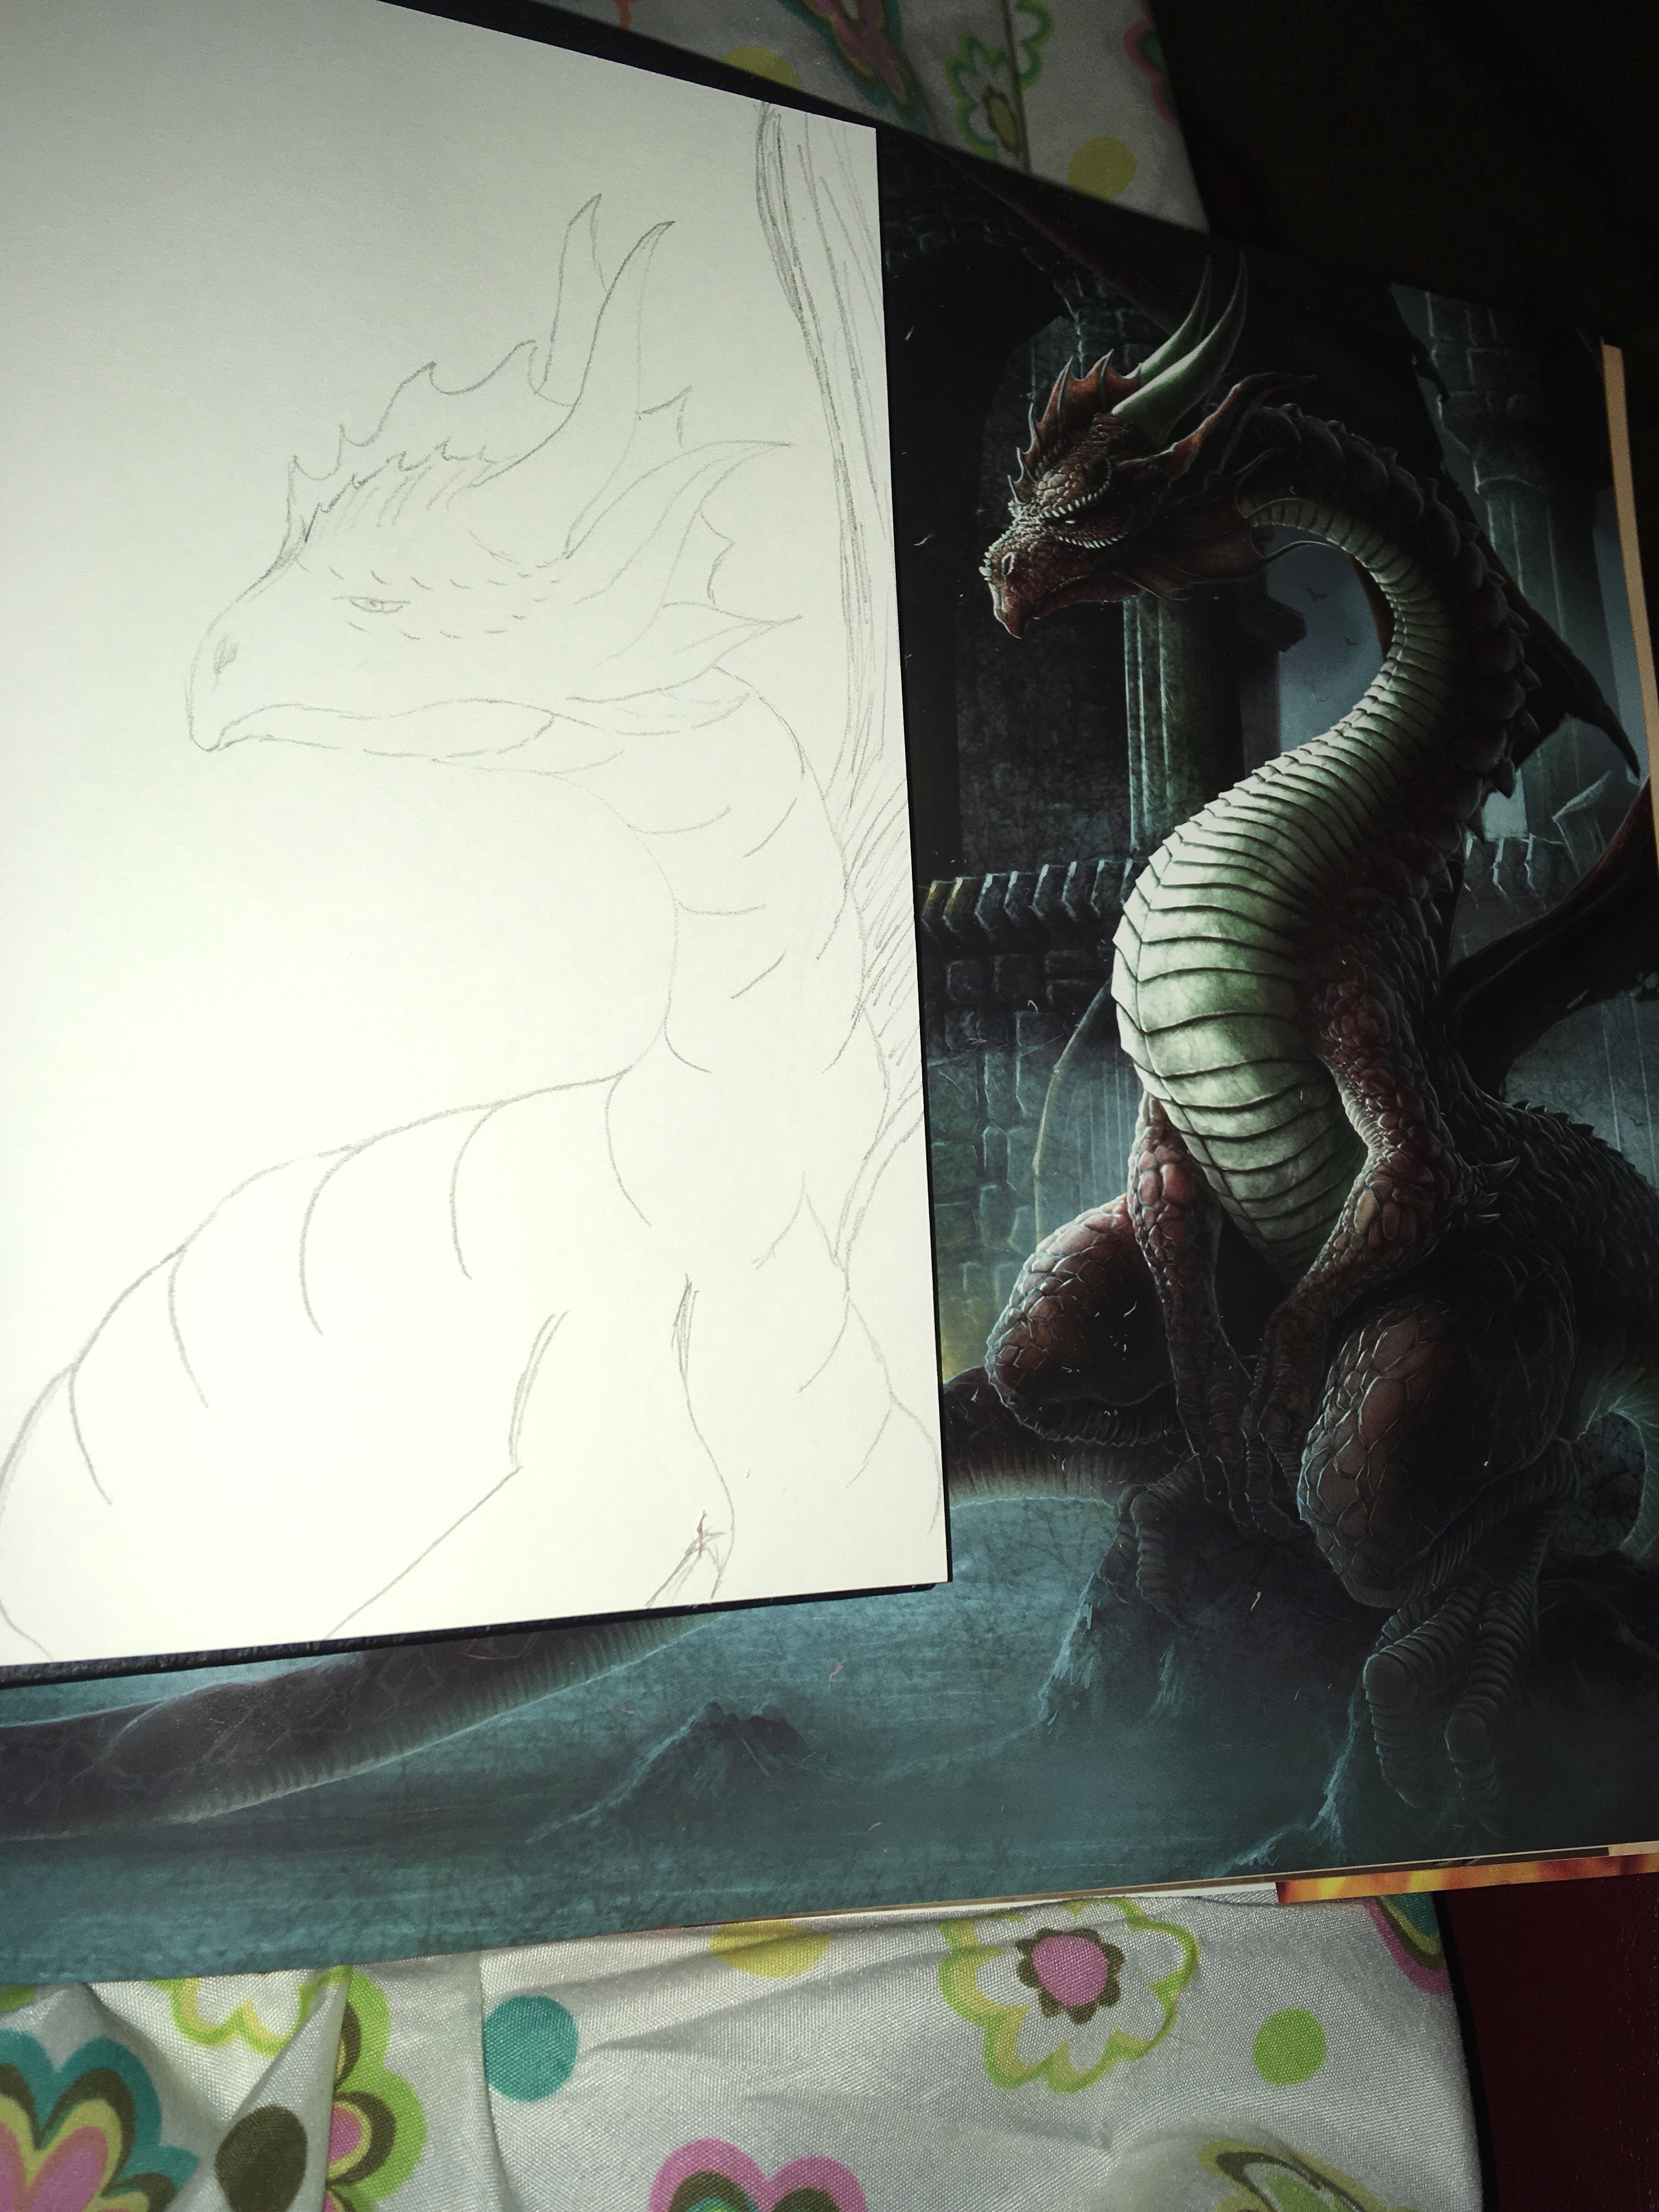 My pencil sketch next to a bomb dragon image